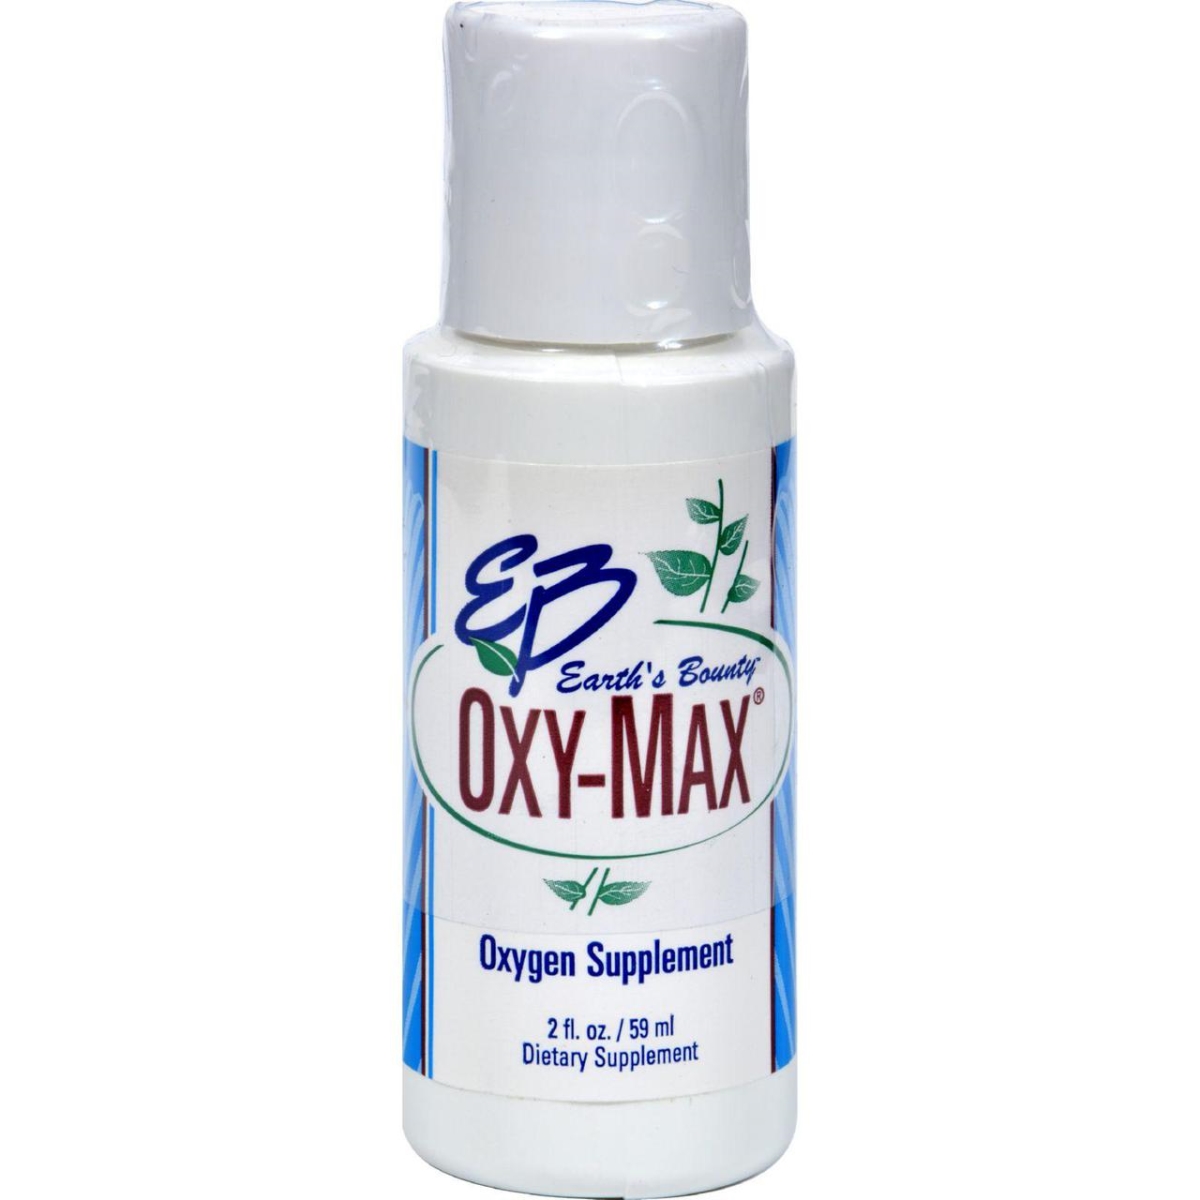 Hg0943464 2 Fl Oz Oxy-max Oxygen Supplement